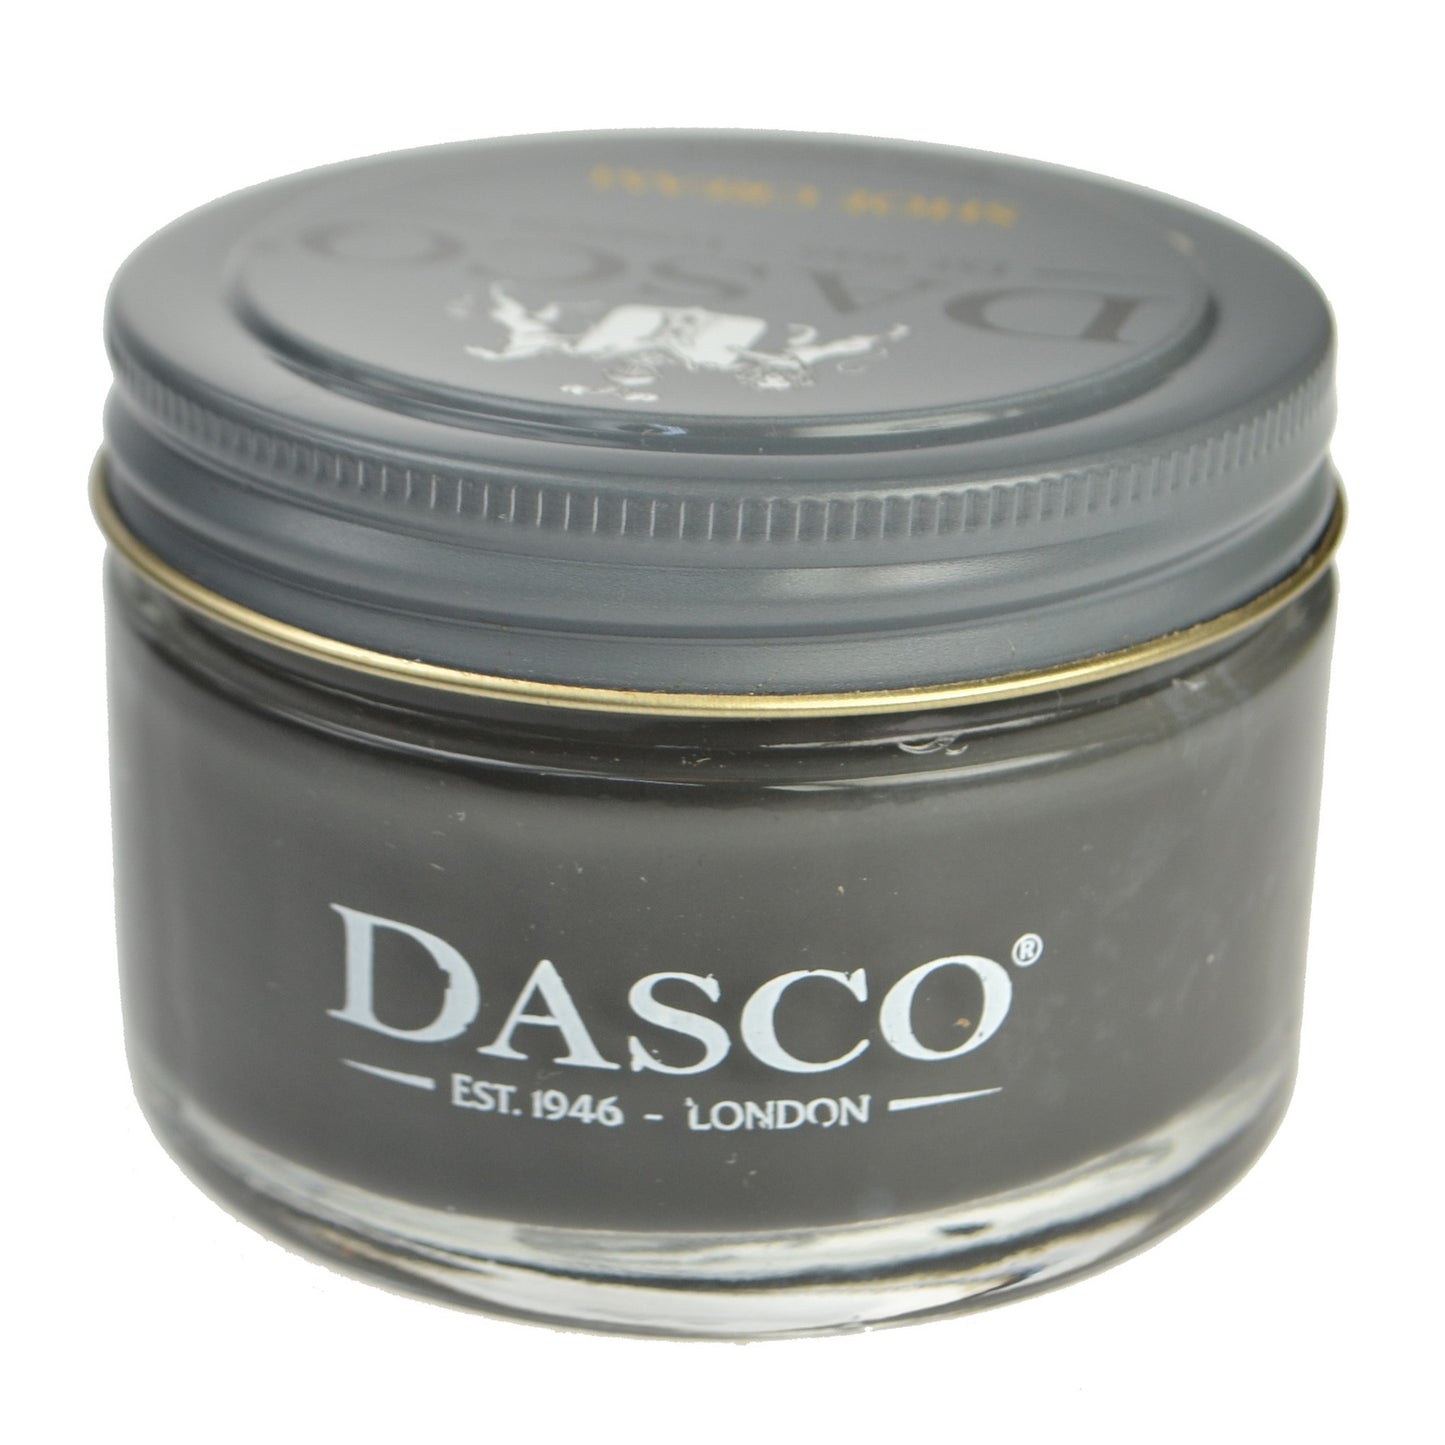 Dasco Shoe Cream Shoe Polish with Beeswax - Mid Grey No.183